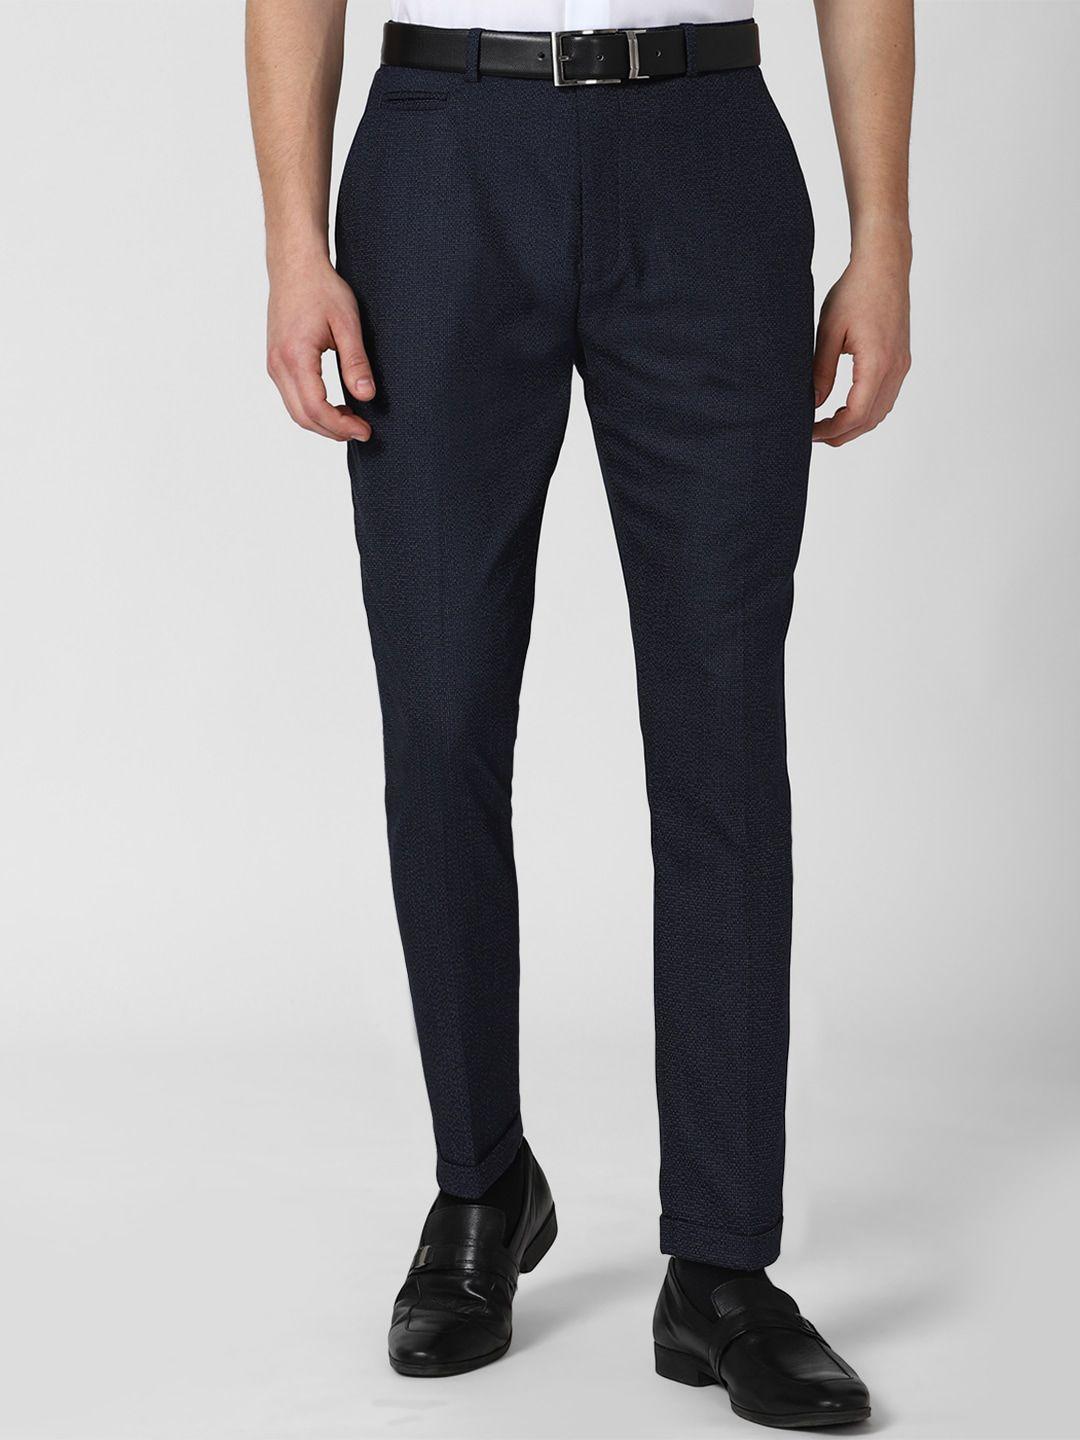 peter england men navy blue solid regular fit formal trousers